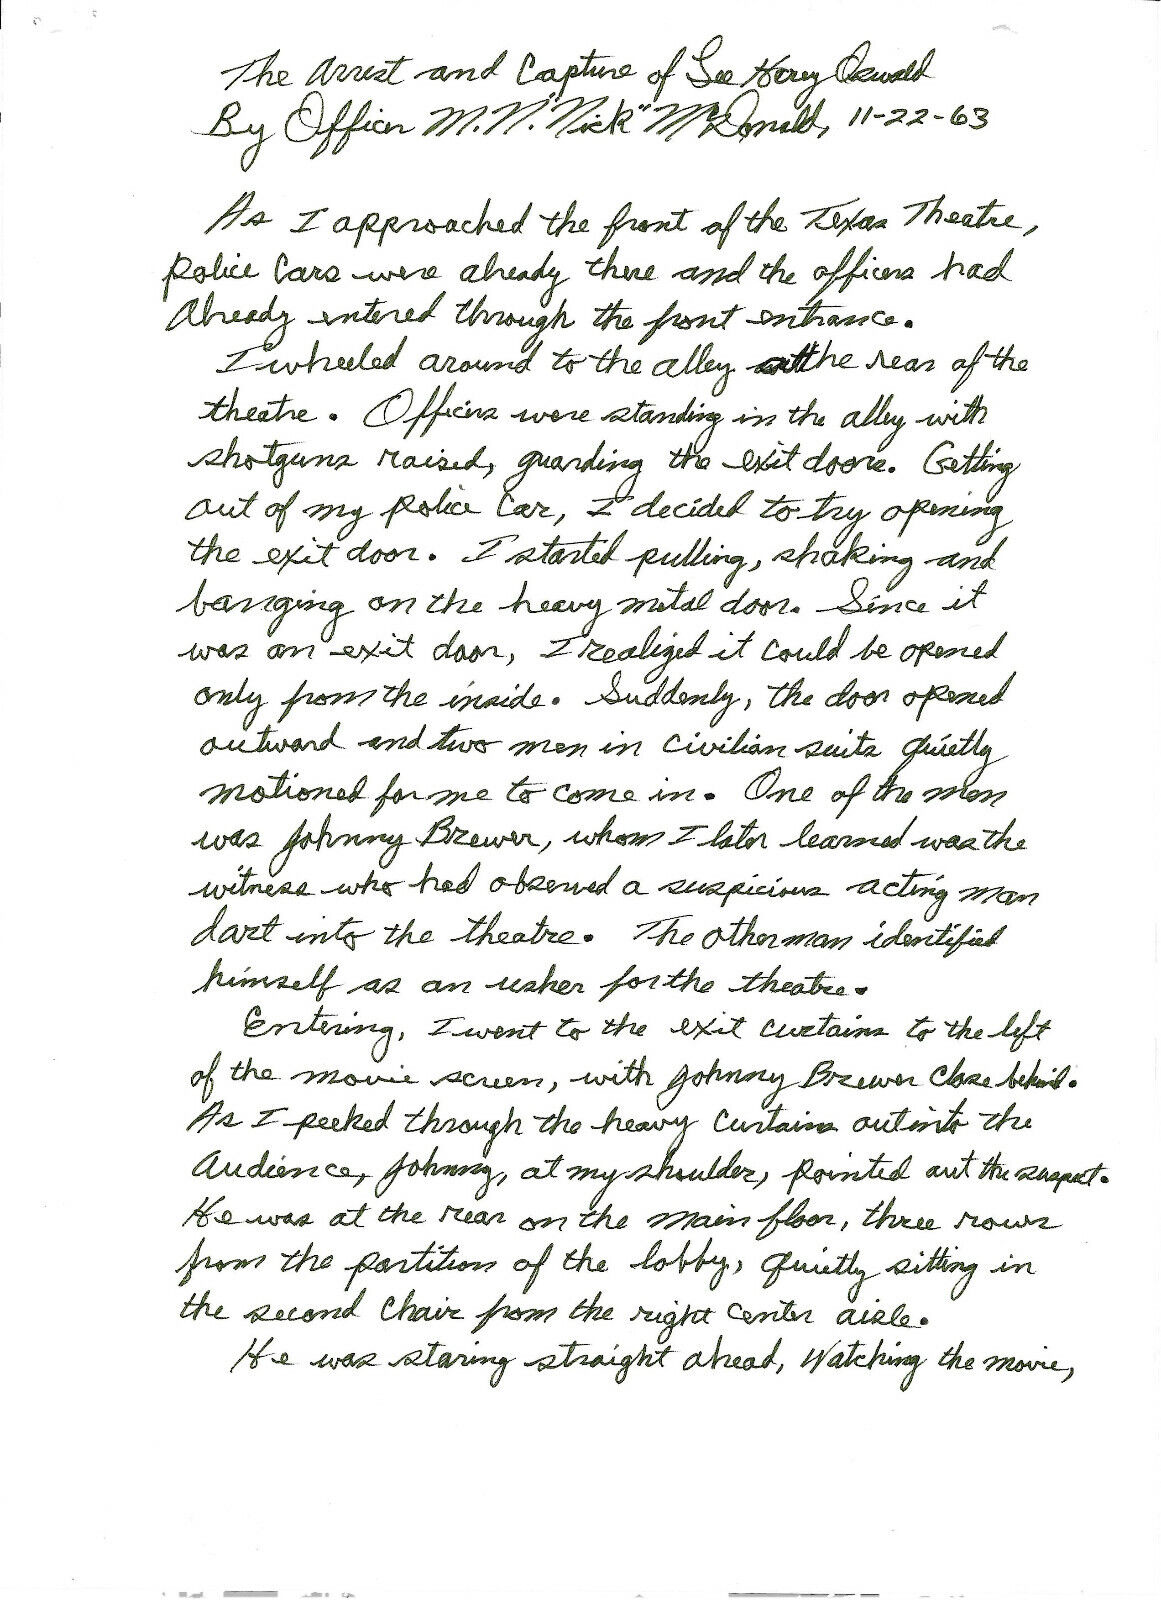 Incredible 5 pg Handwritten Narrative of the Arrest&Capture of Lee Harvey Oswald